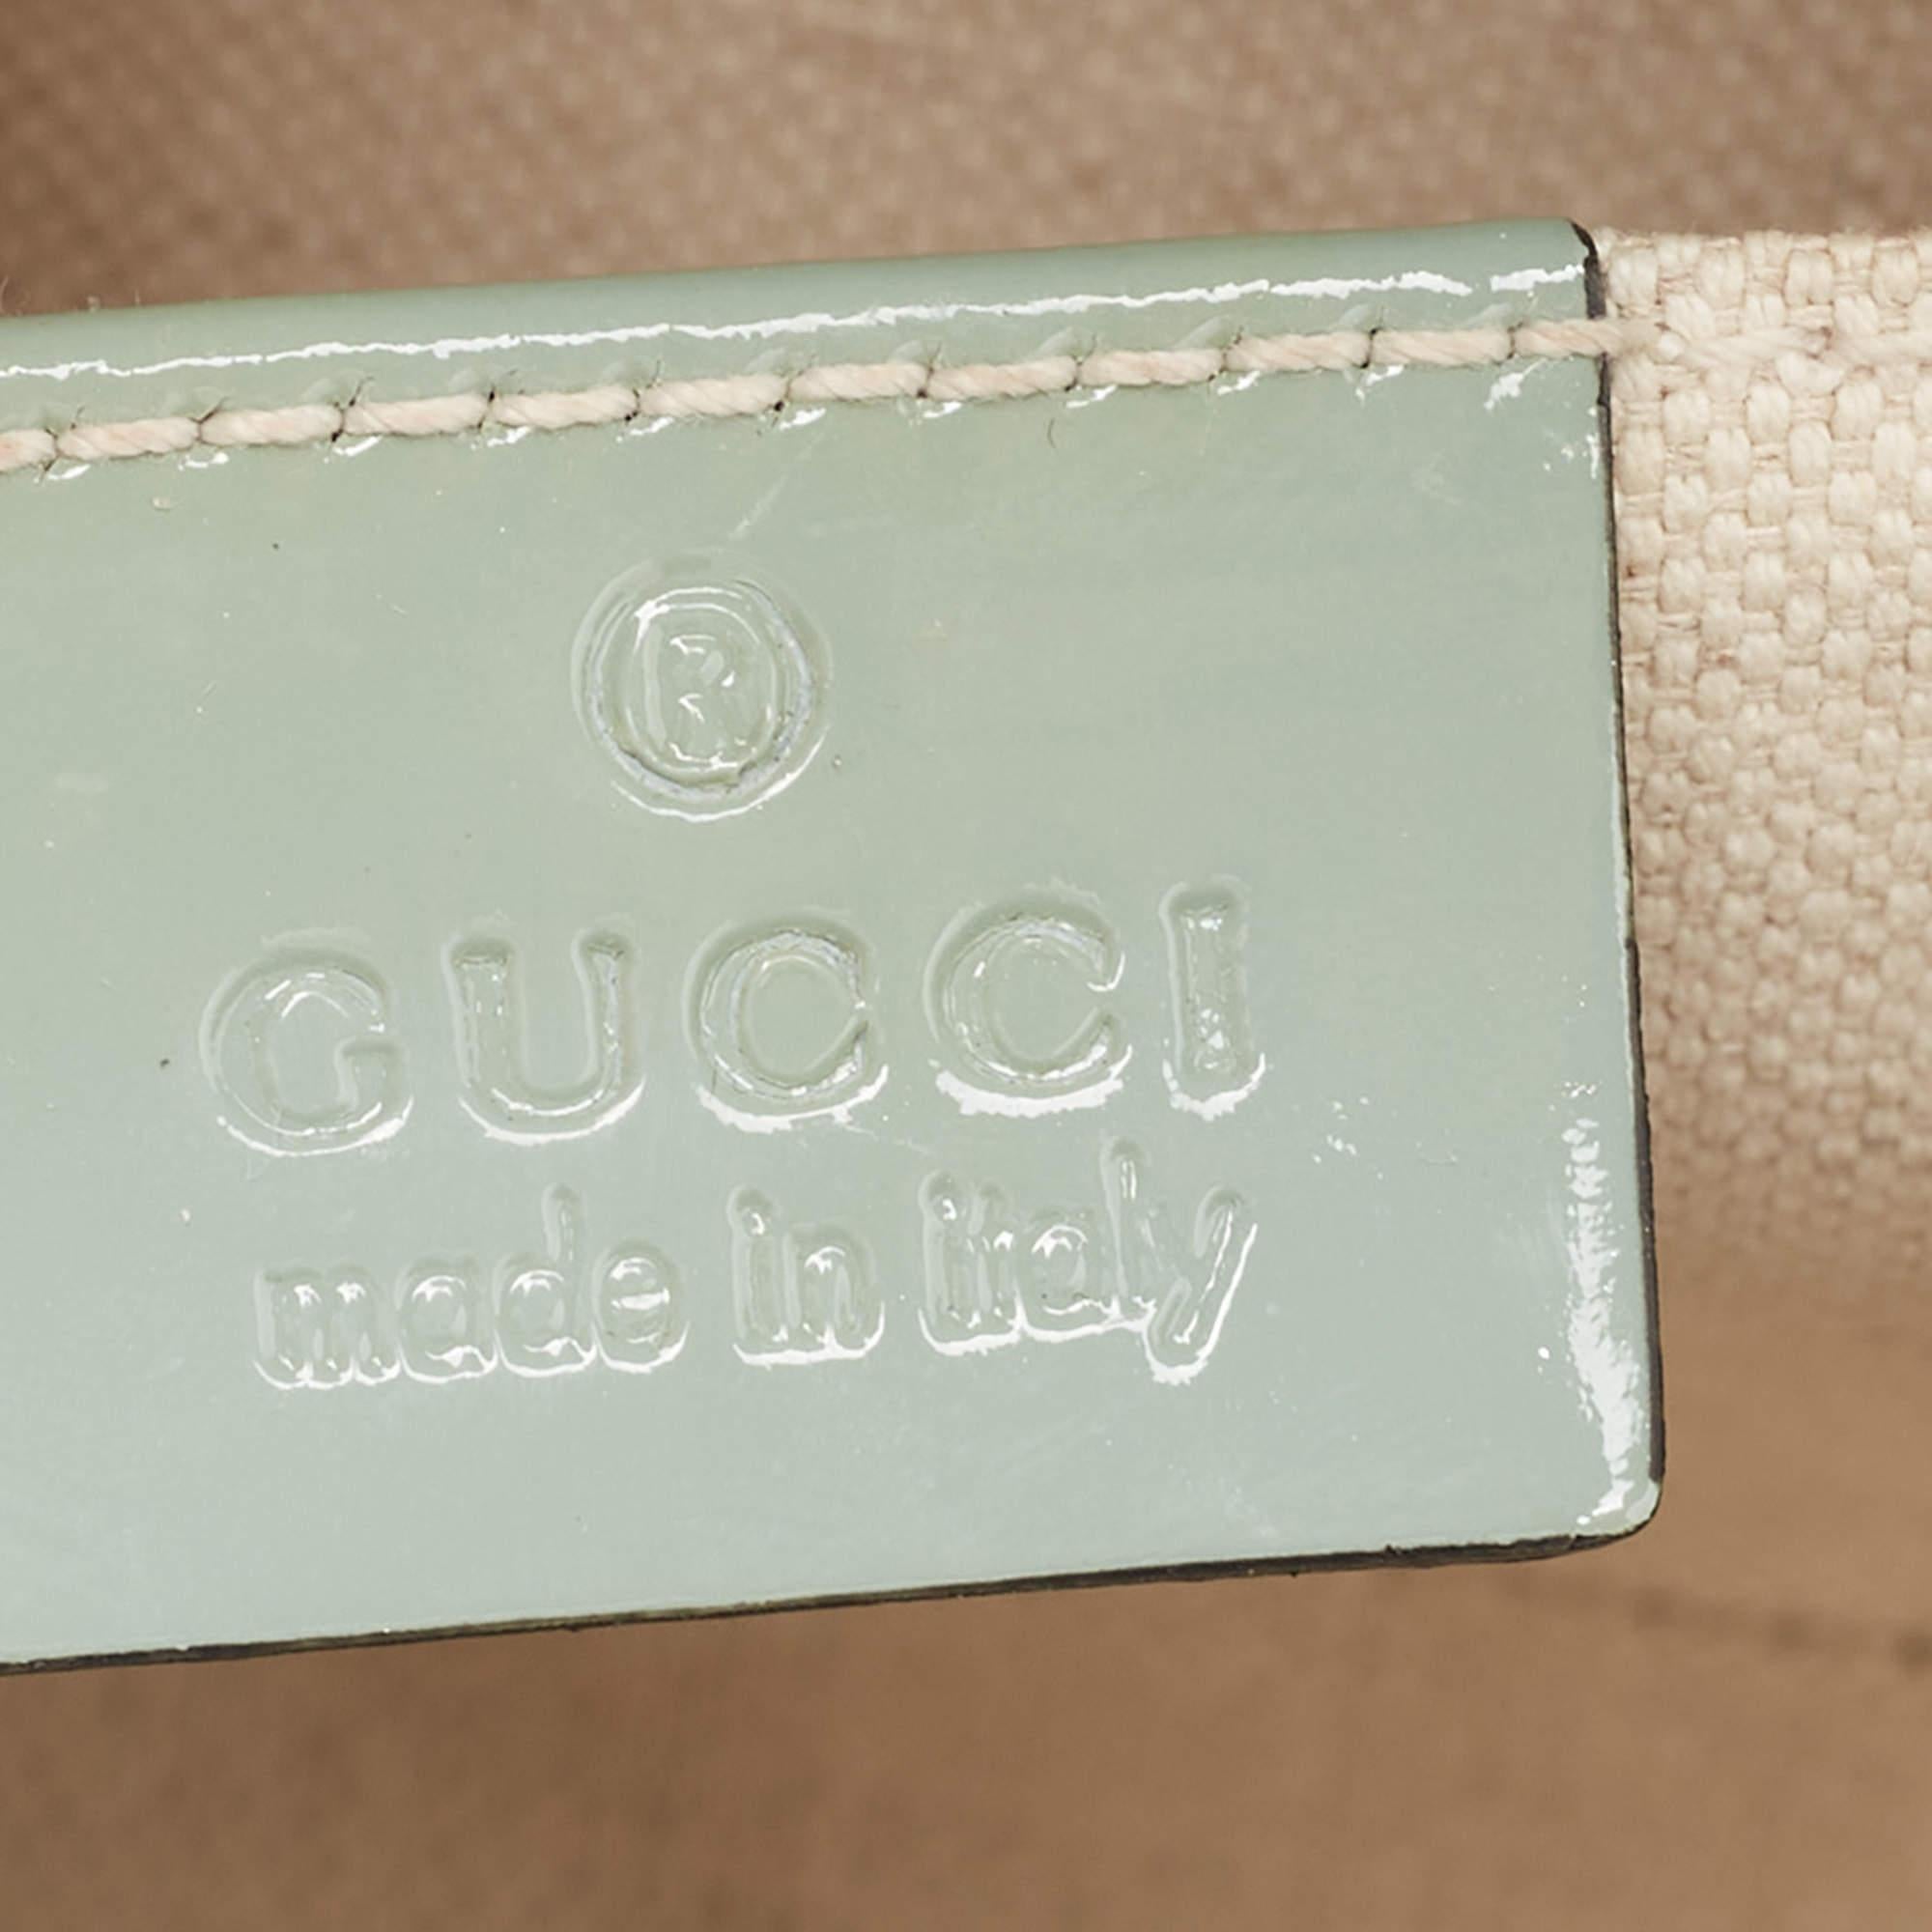 Gucci Light Green Patent Leather Emily Shoulder Bag 4